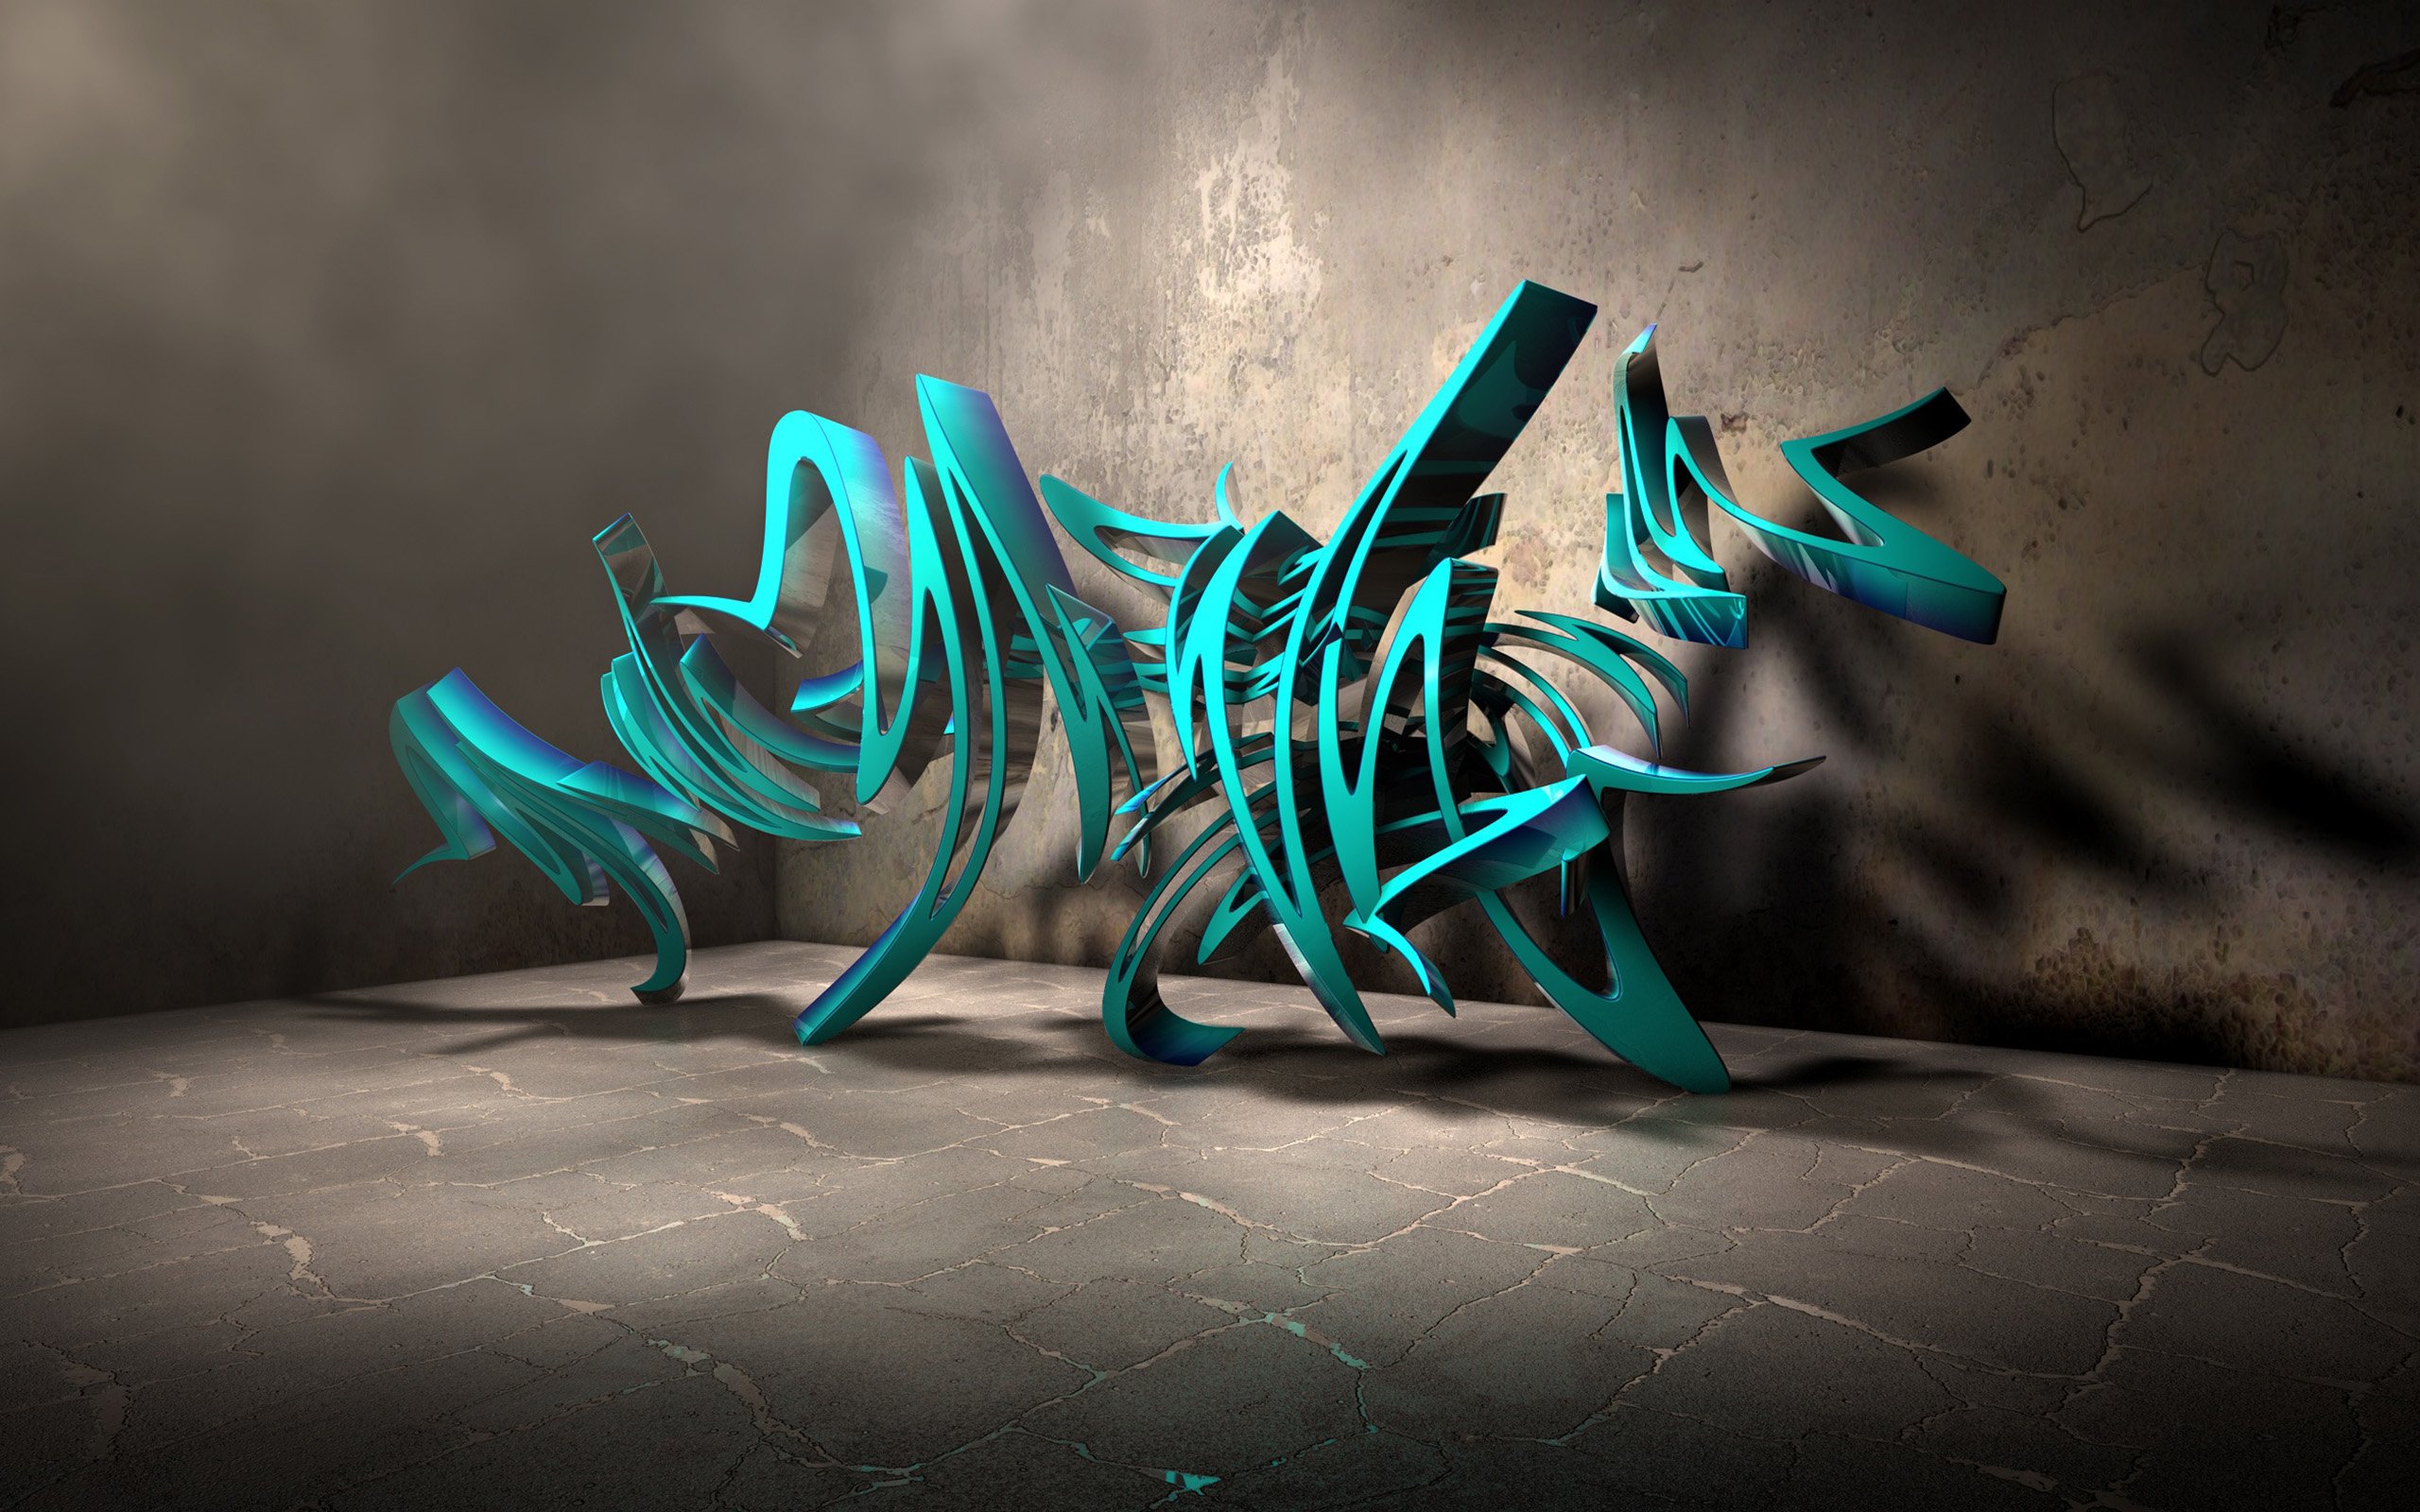  Abstract Graffiti Wallcapture Wallpaper 2560x1600 Full HD Wallpapers